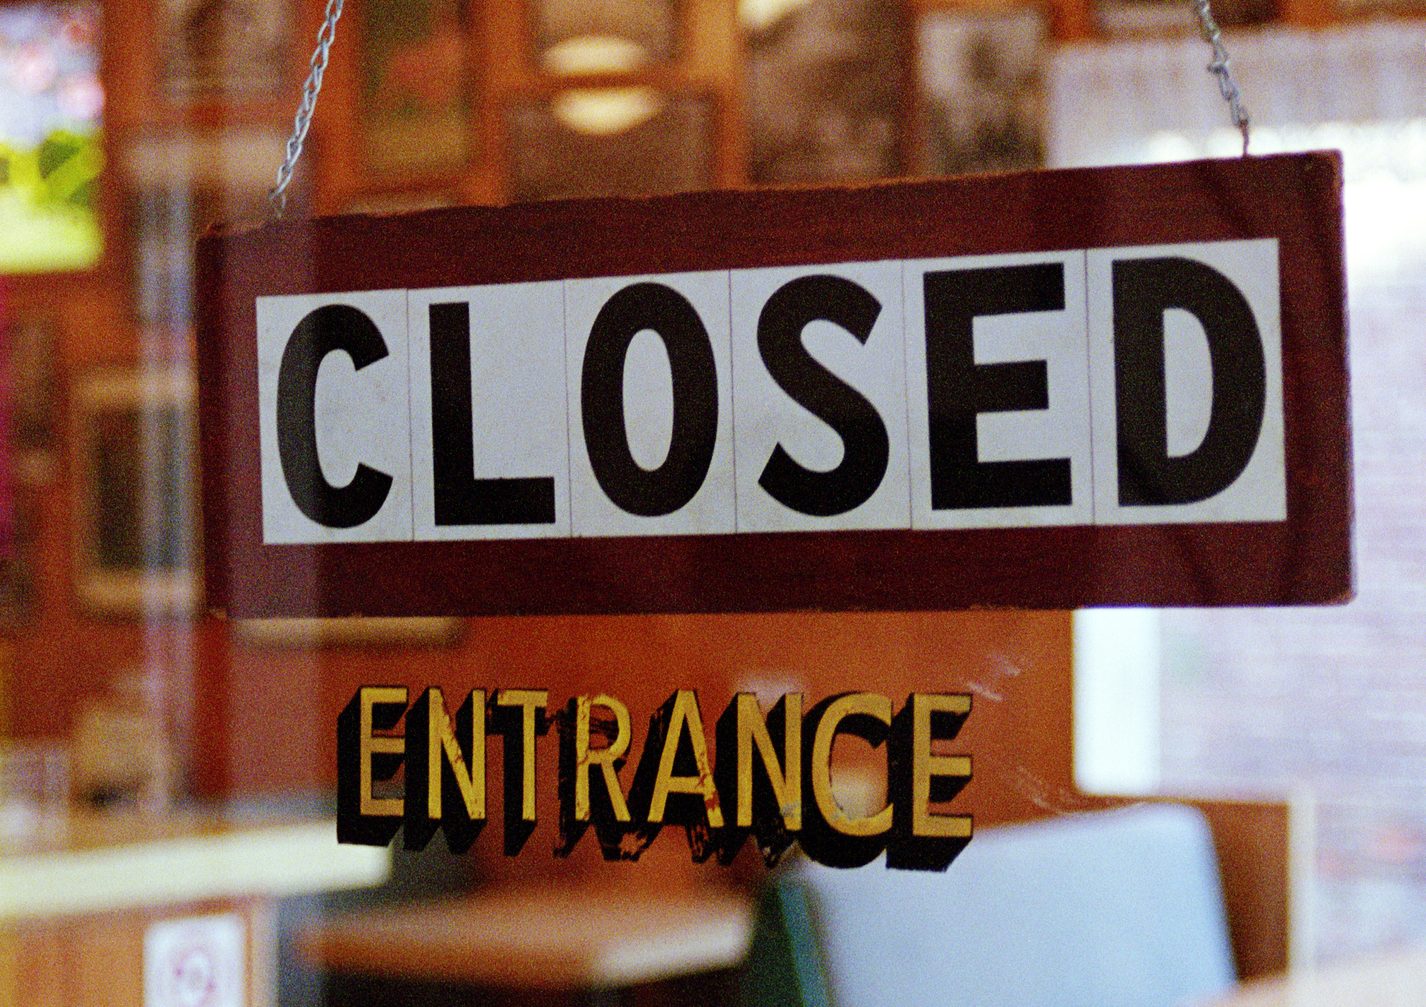 'Closed' sign hanging in eating establishment's doorway